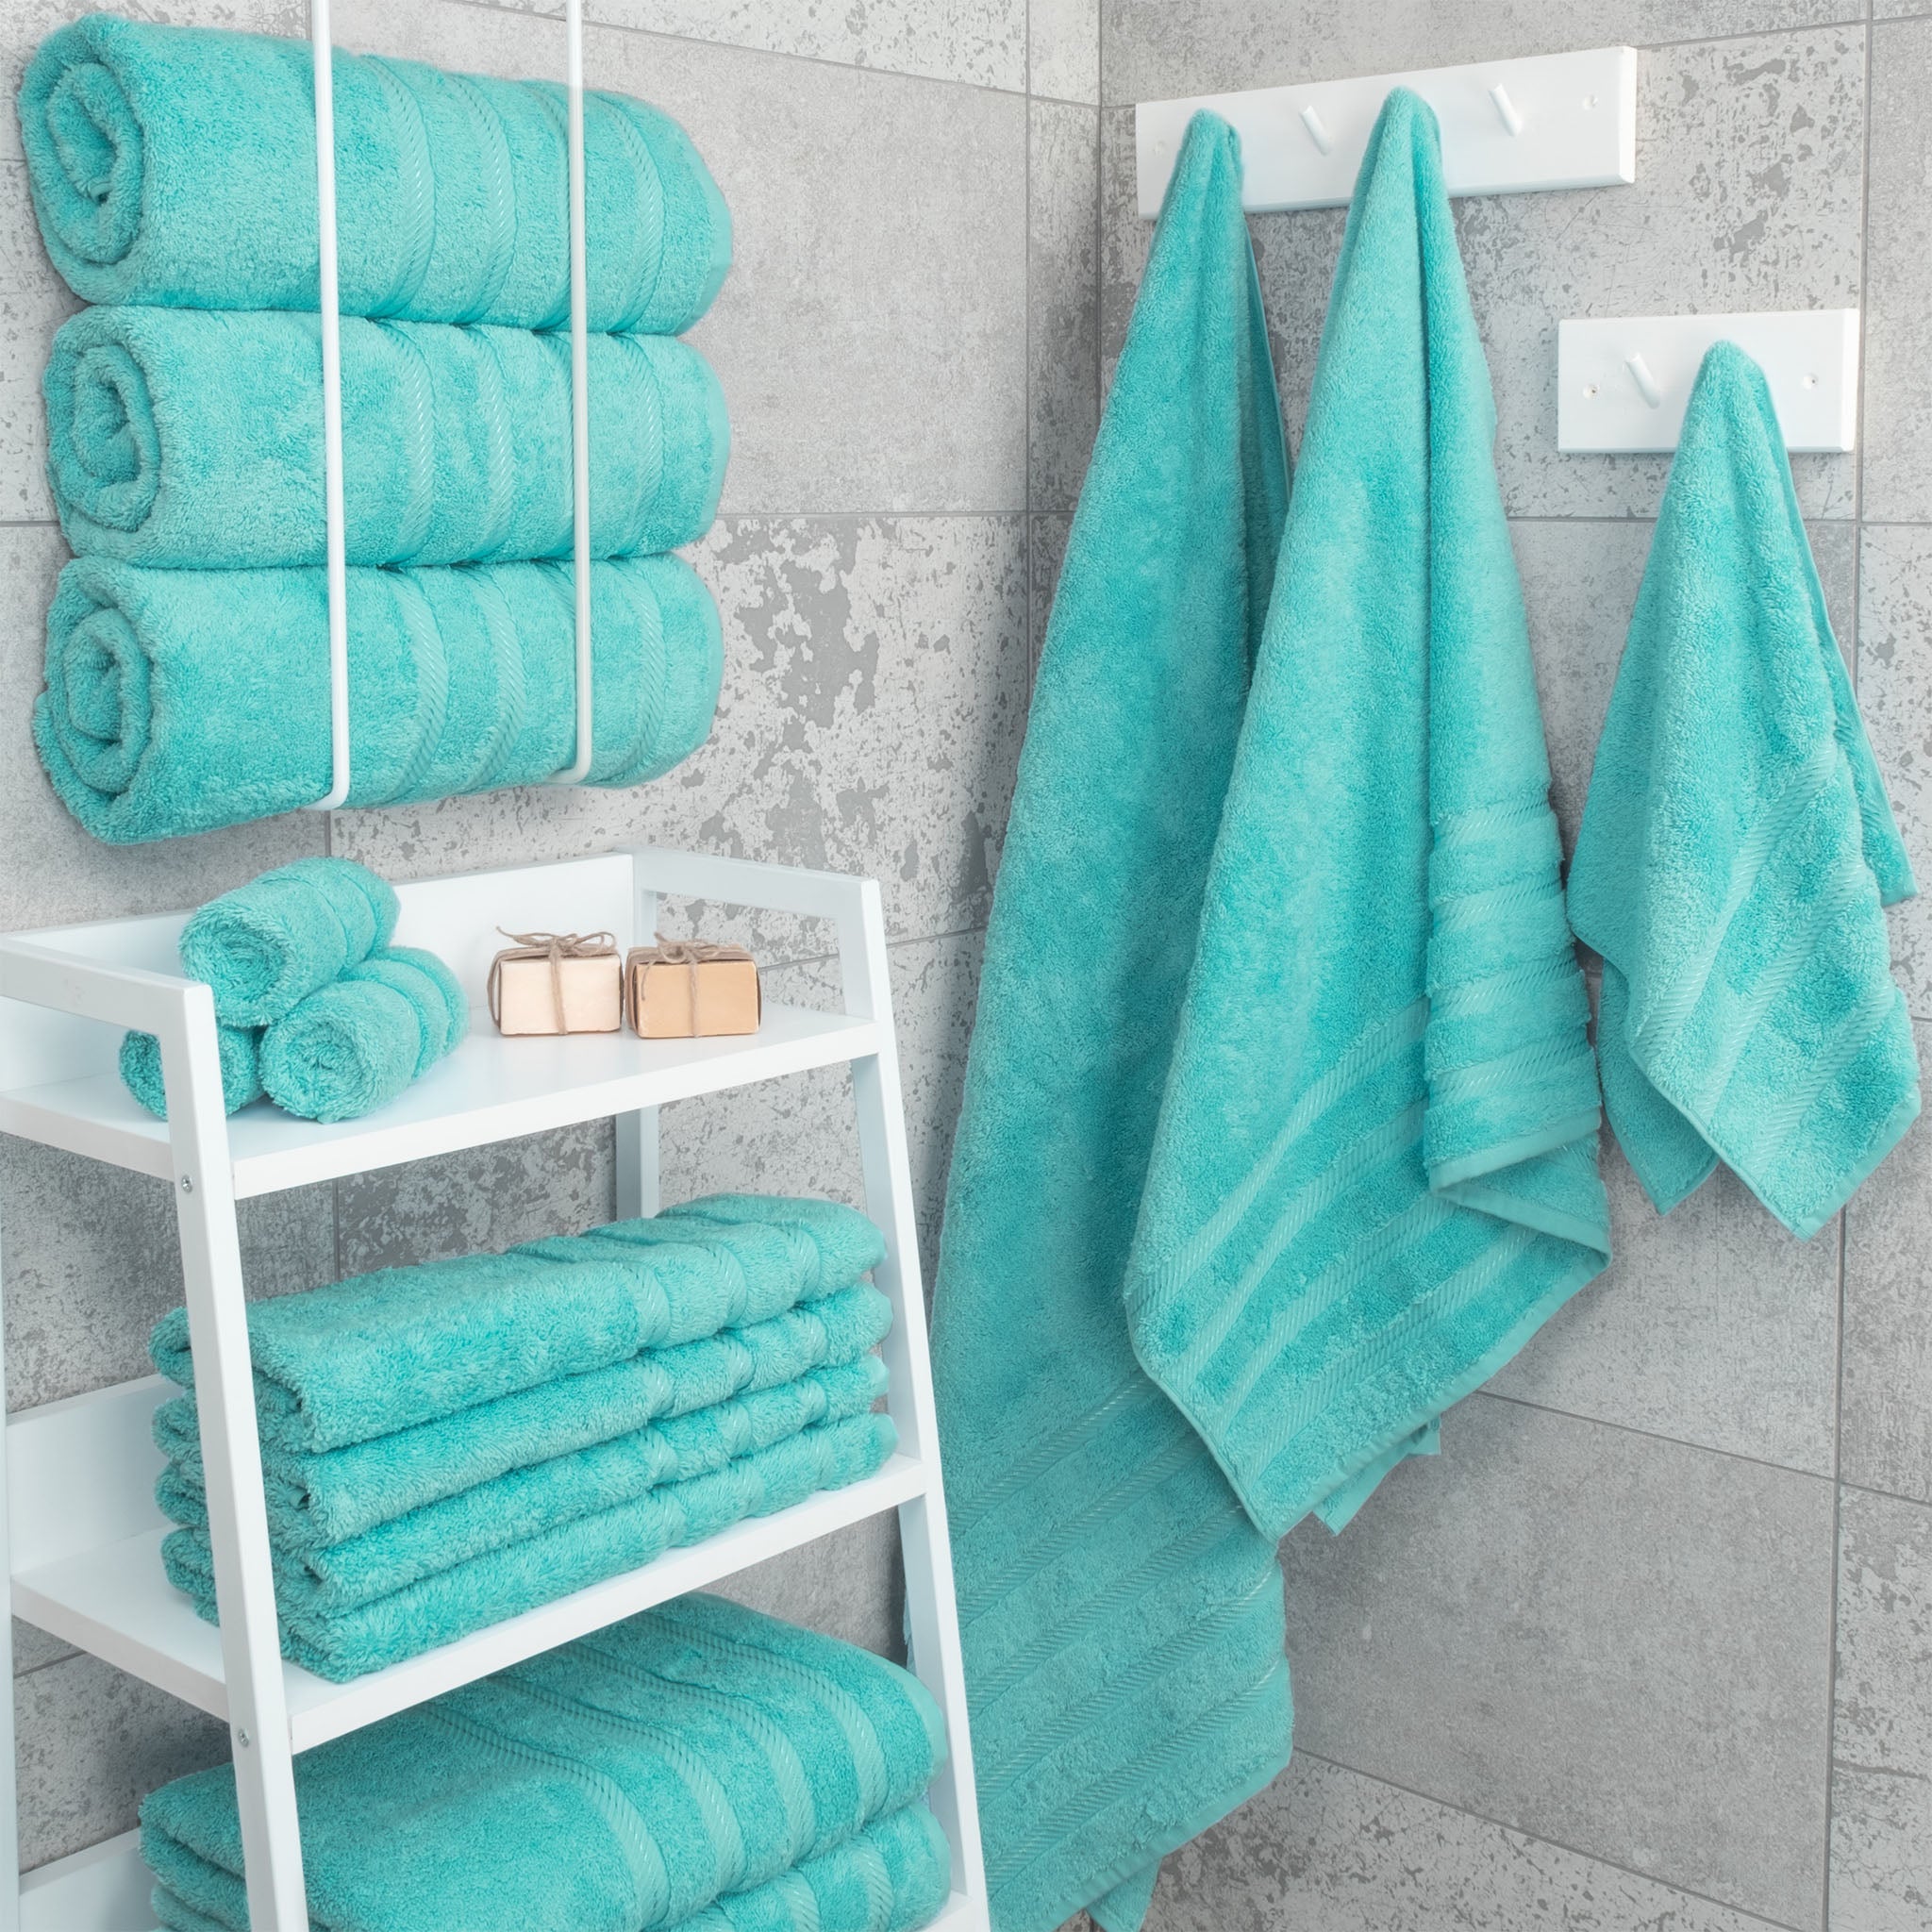 American Soft Linen Bath Towels 100% Turkish Cotton 4 Piece Luxury Bath Towel Sets for Bathroom - Turquoise Blue